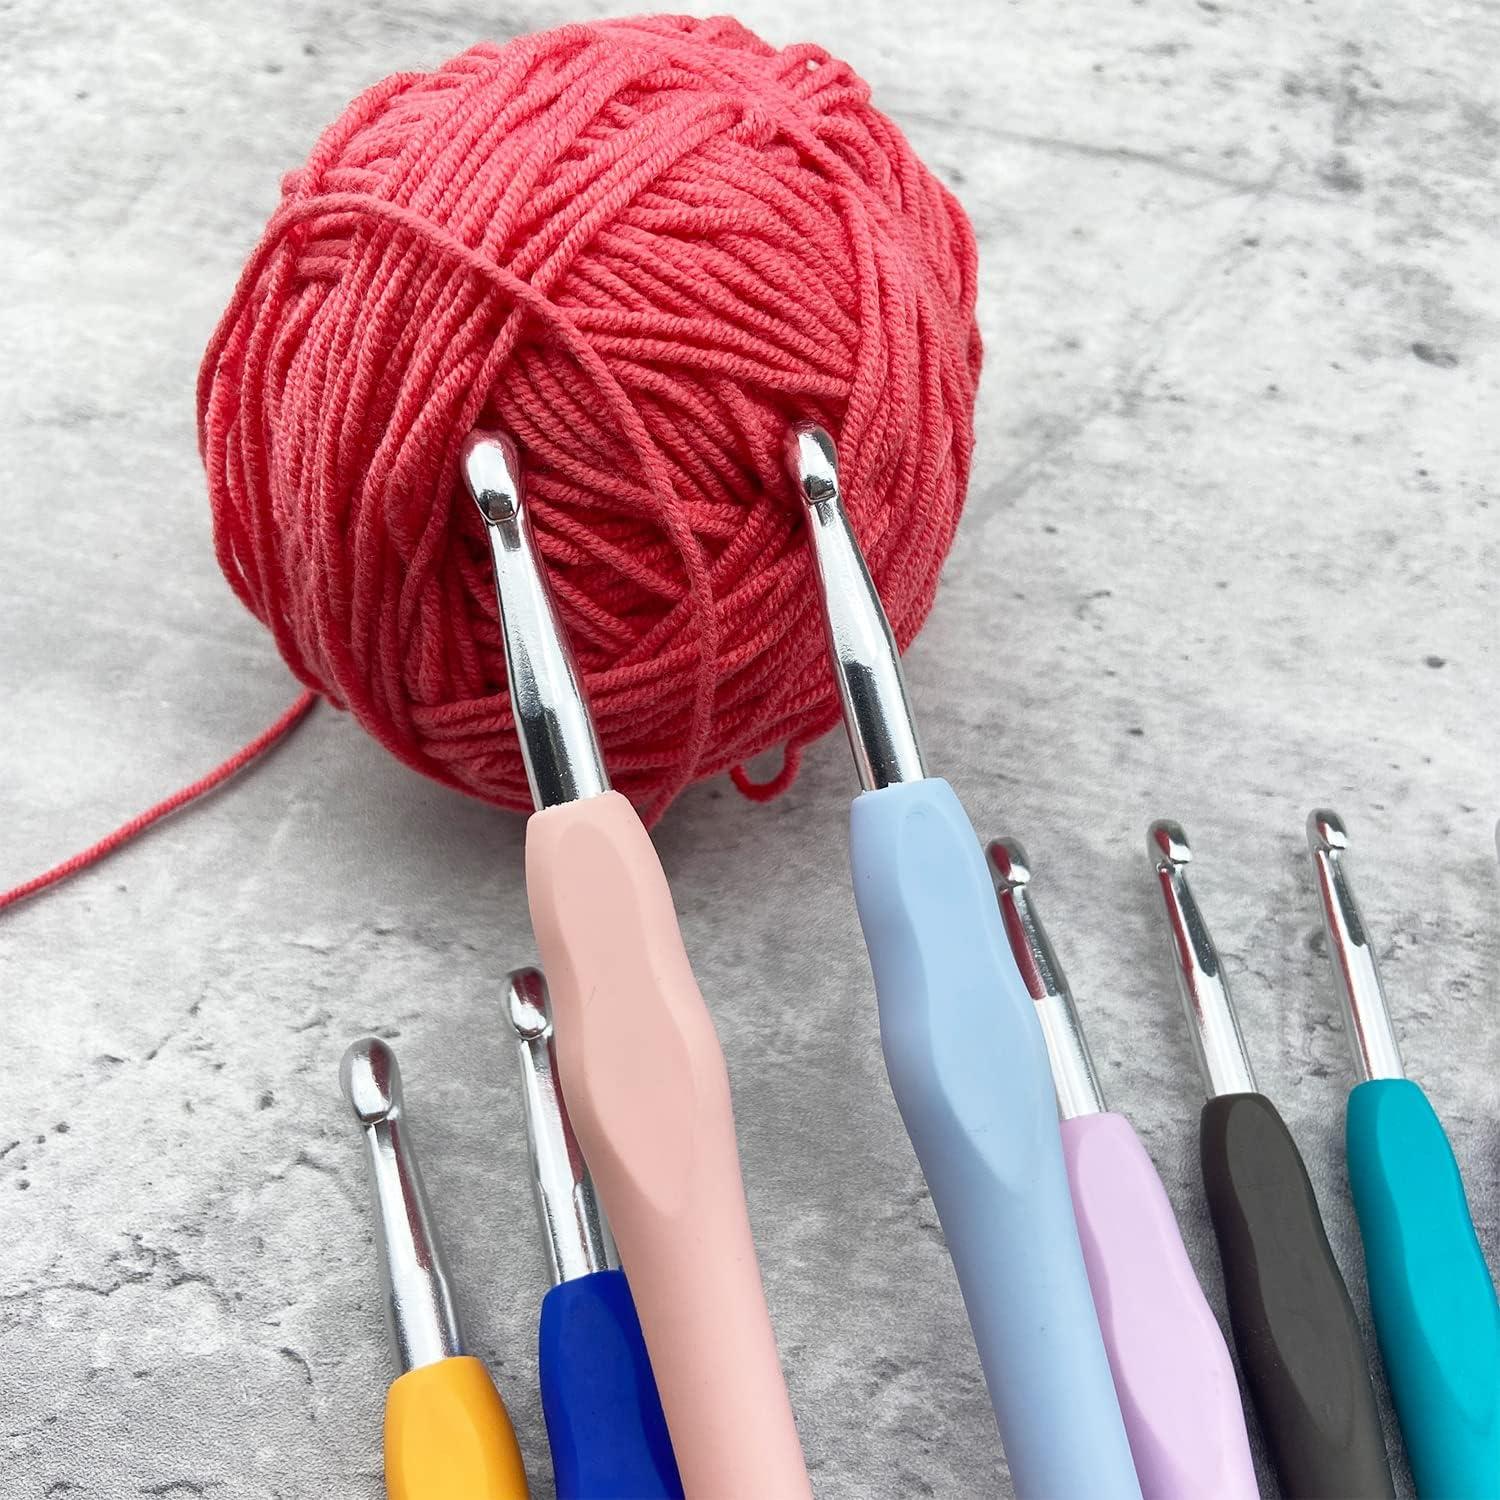 Mdoker Extra Long Crochet Hooks Size(2.25mm-6mm) Ergonomic Grip Soft Handles for Handmade DIY Crocheting Crochet Hook Needles for Arthritic Hands